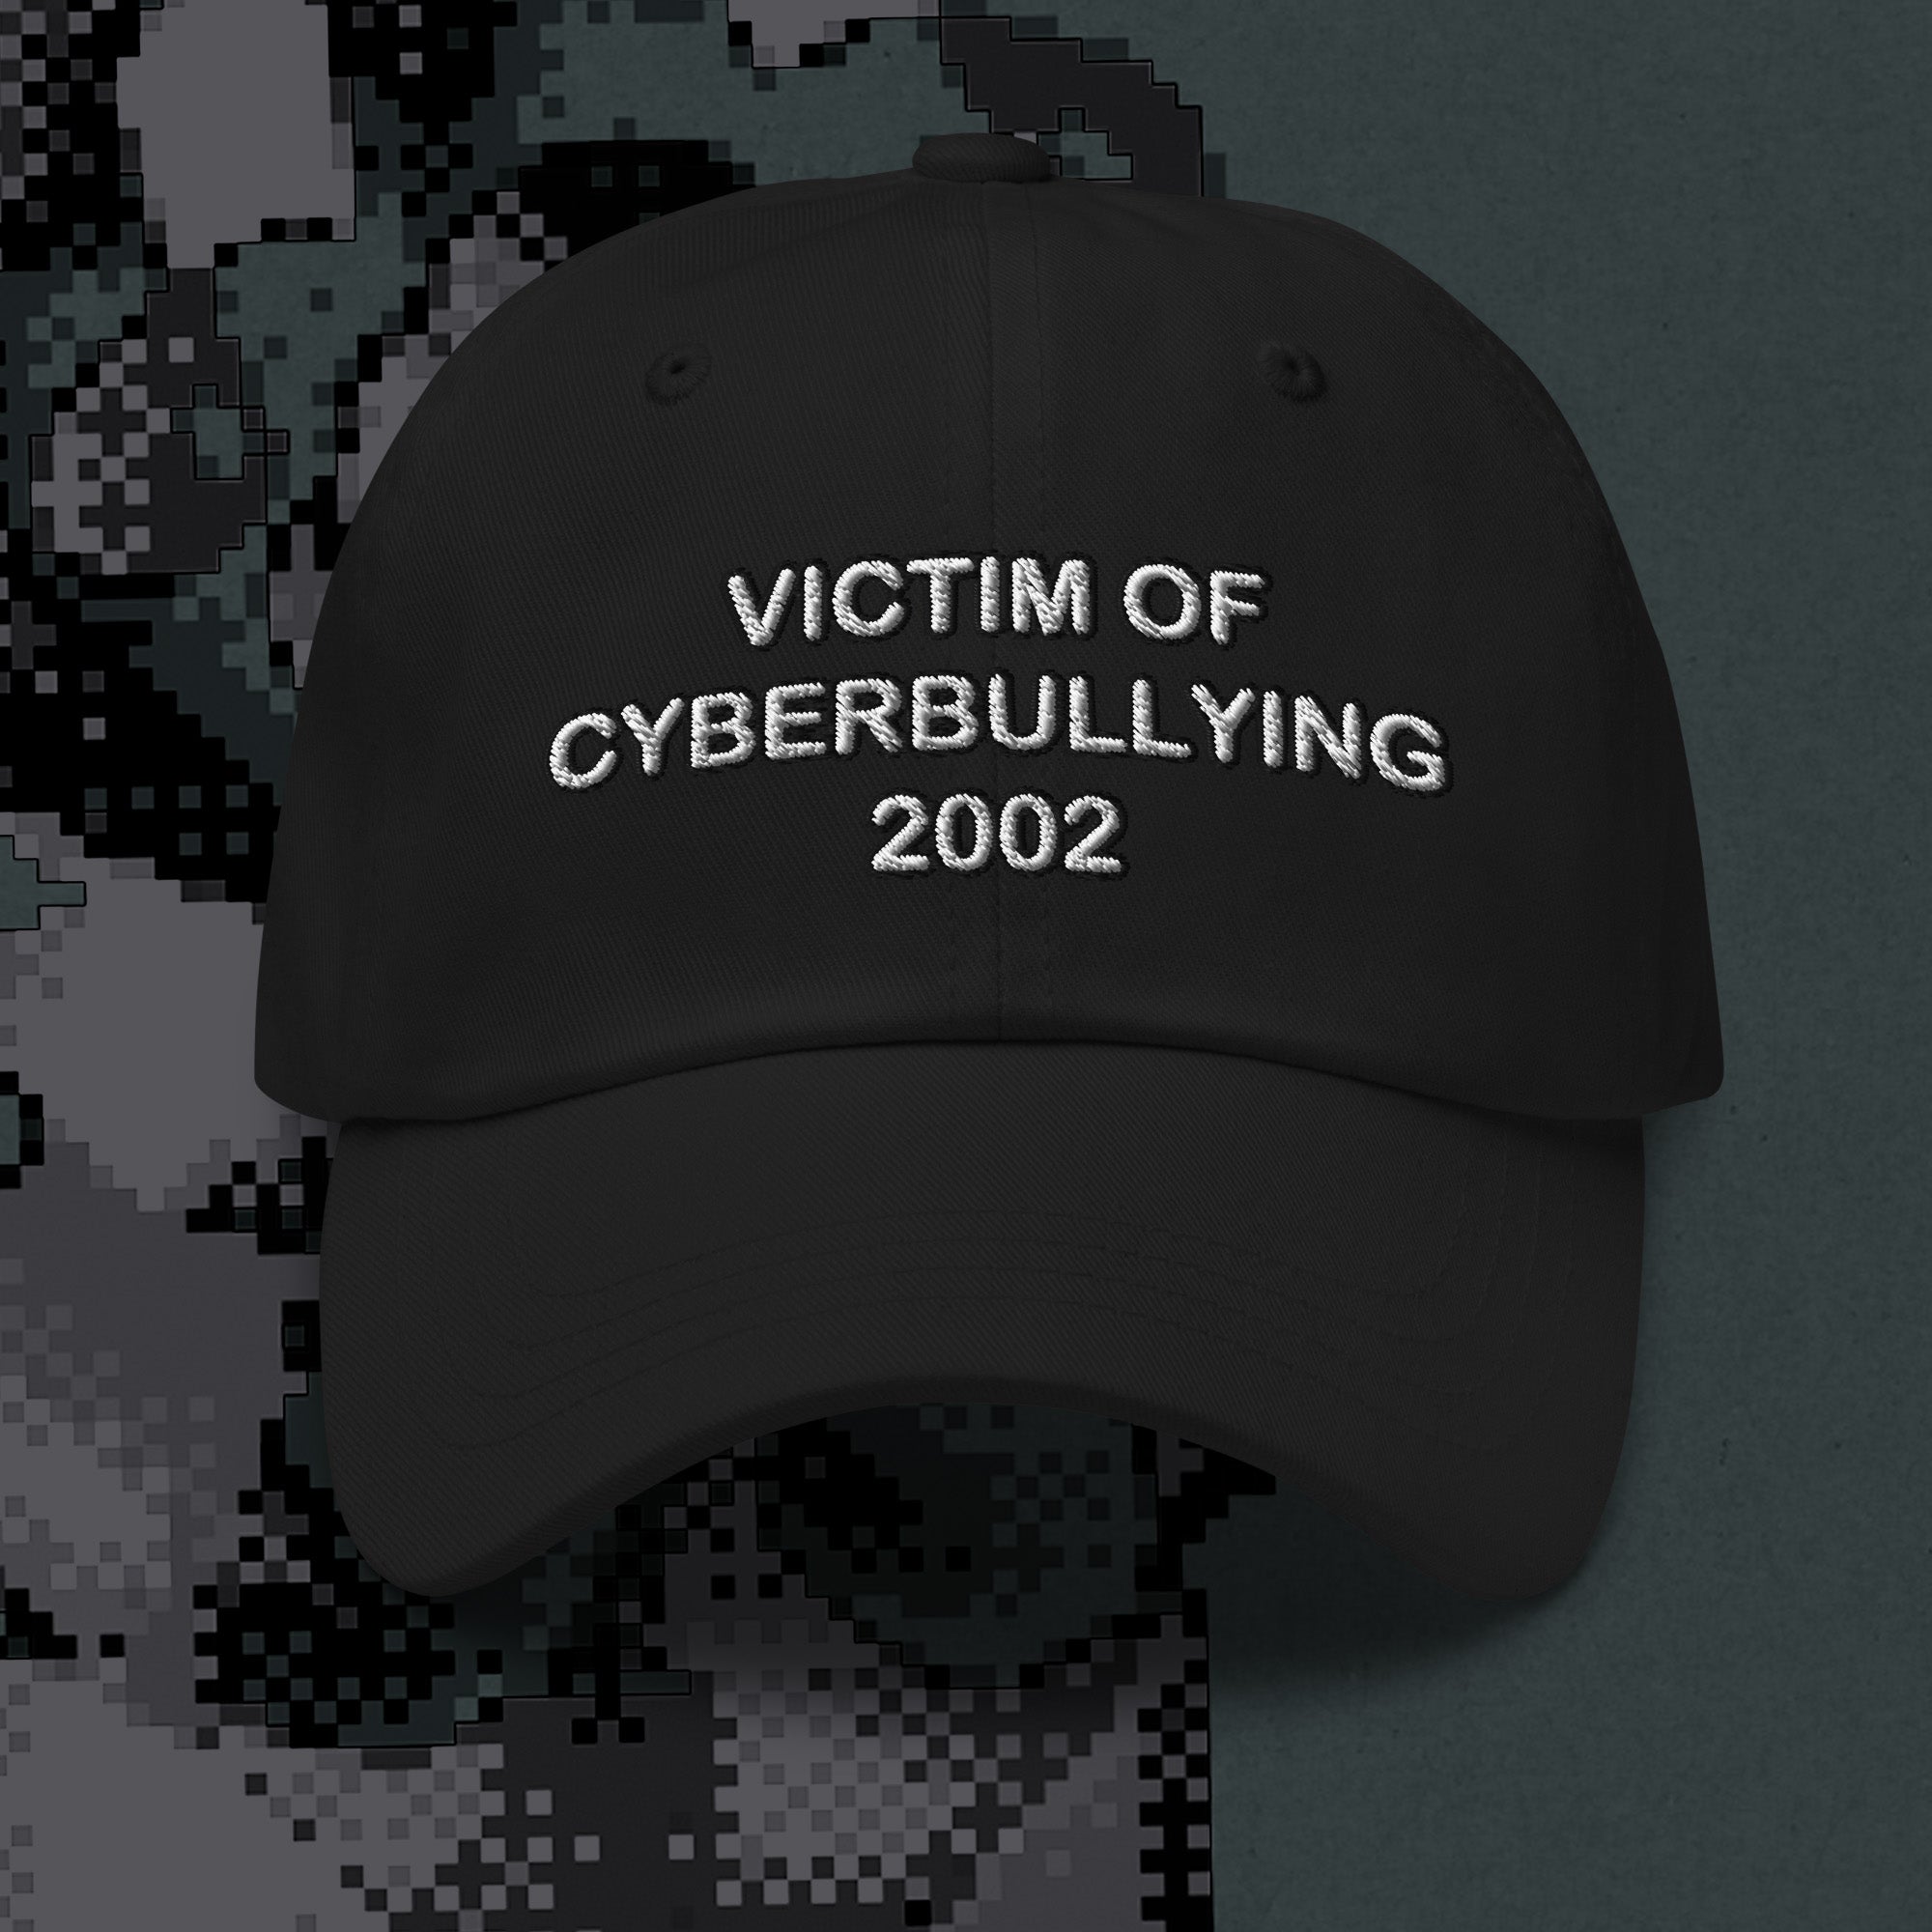 2002 cyberbullying incident